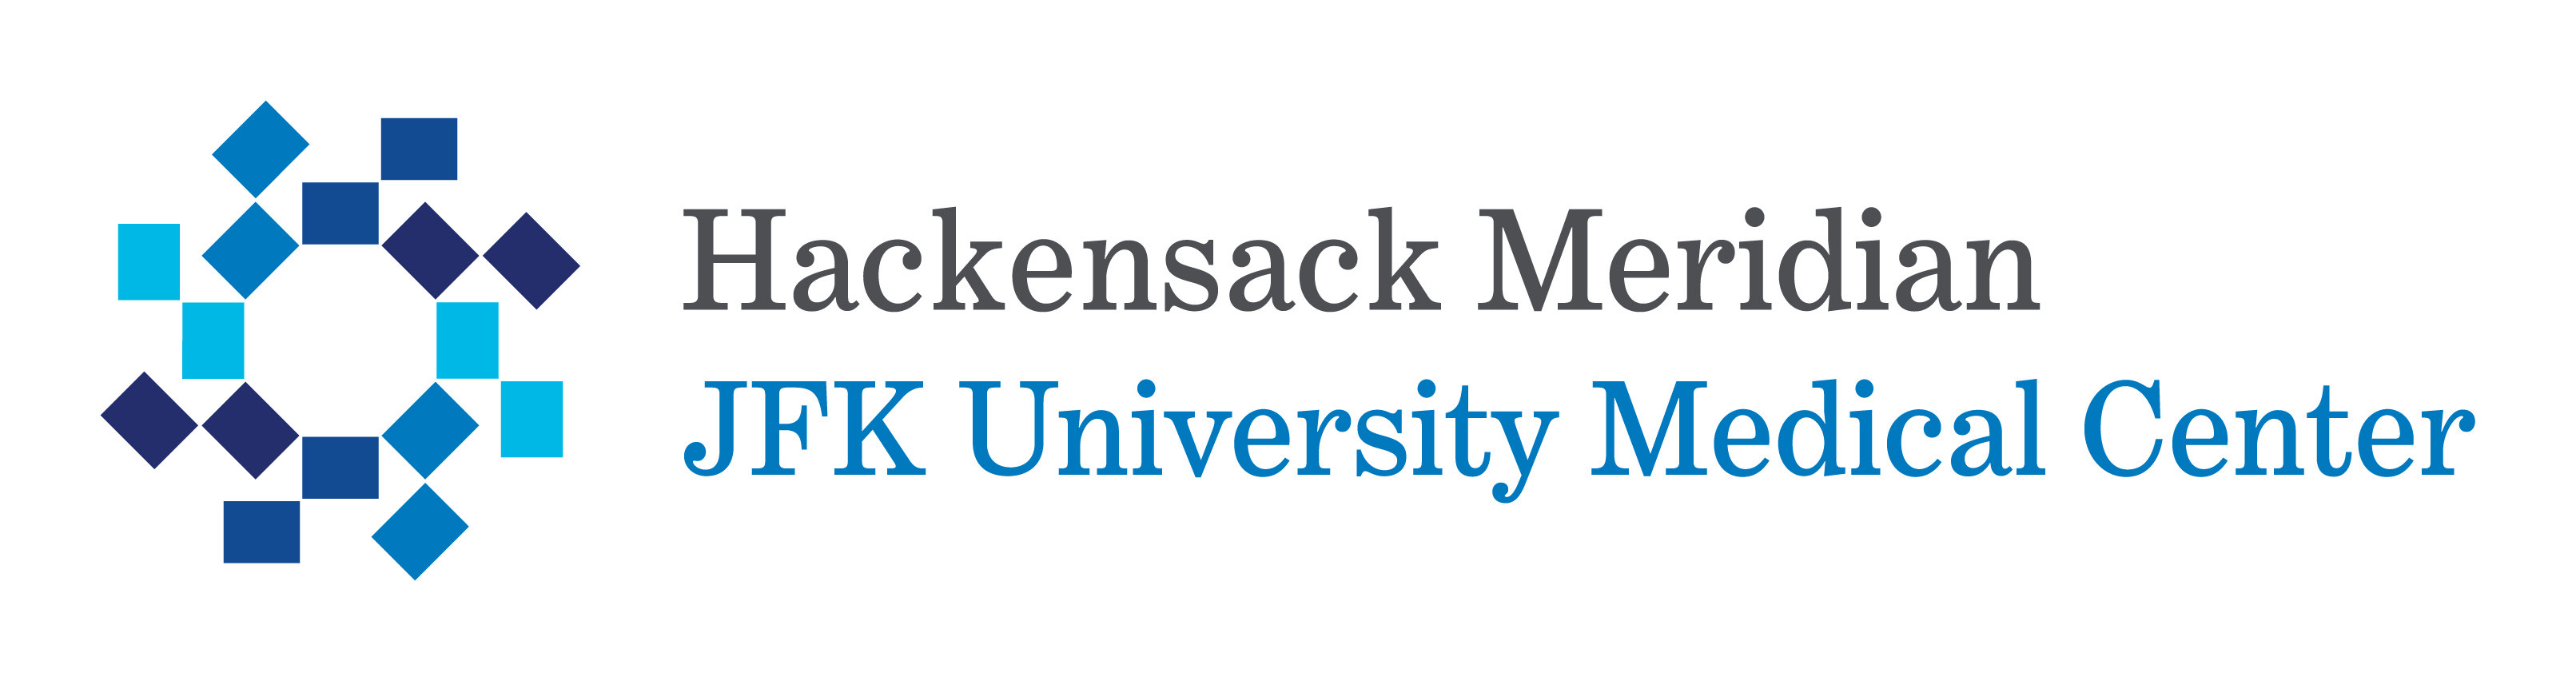 Hackensack Meridian Medical Center